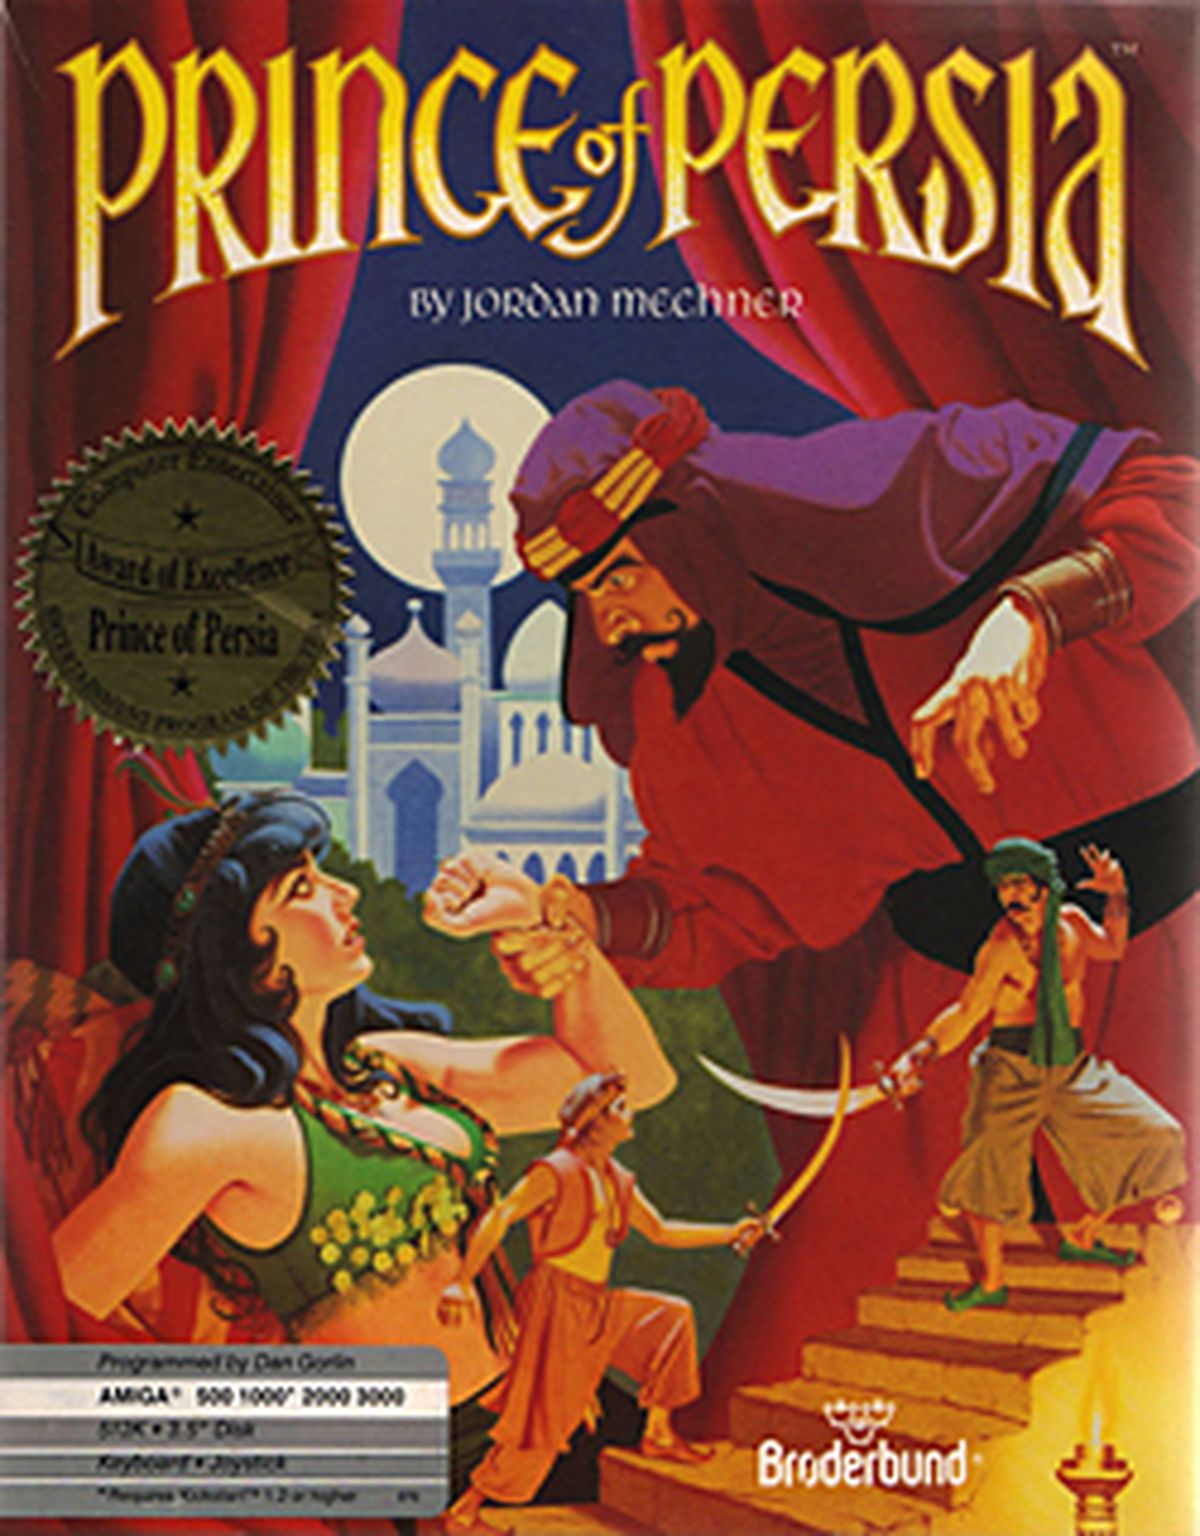 Prince of Persia, prince persia game 